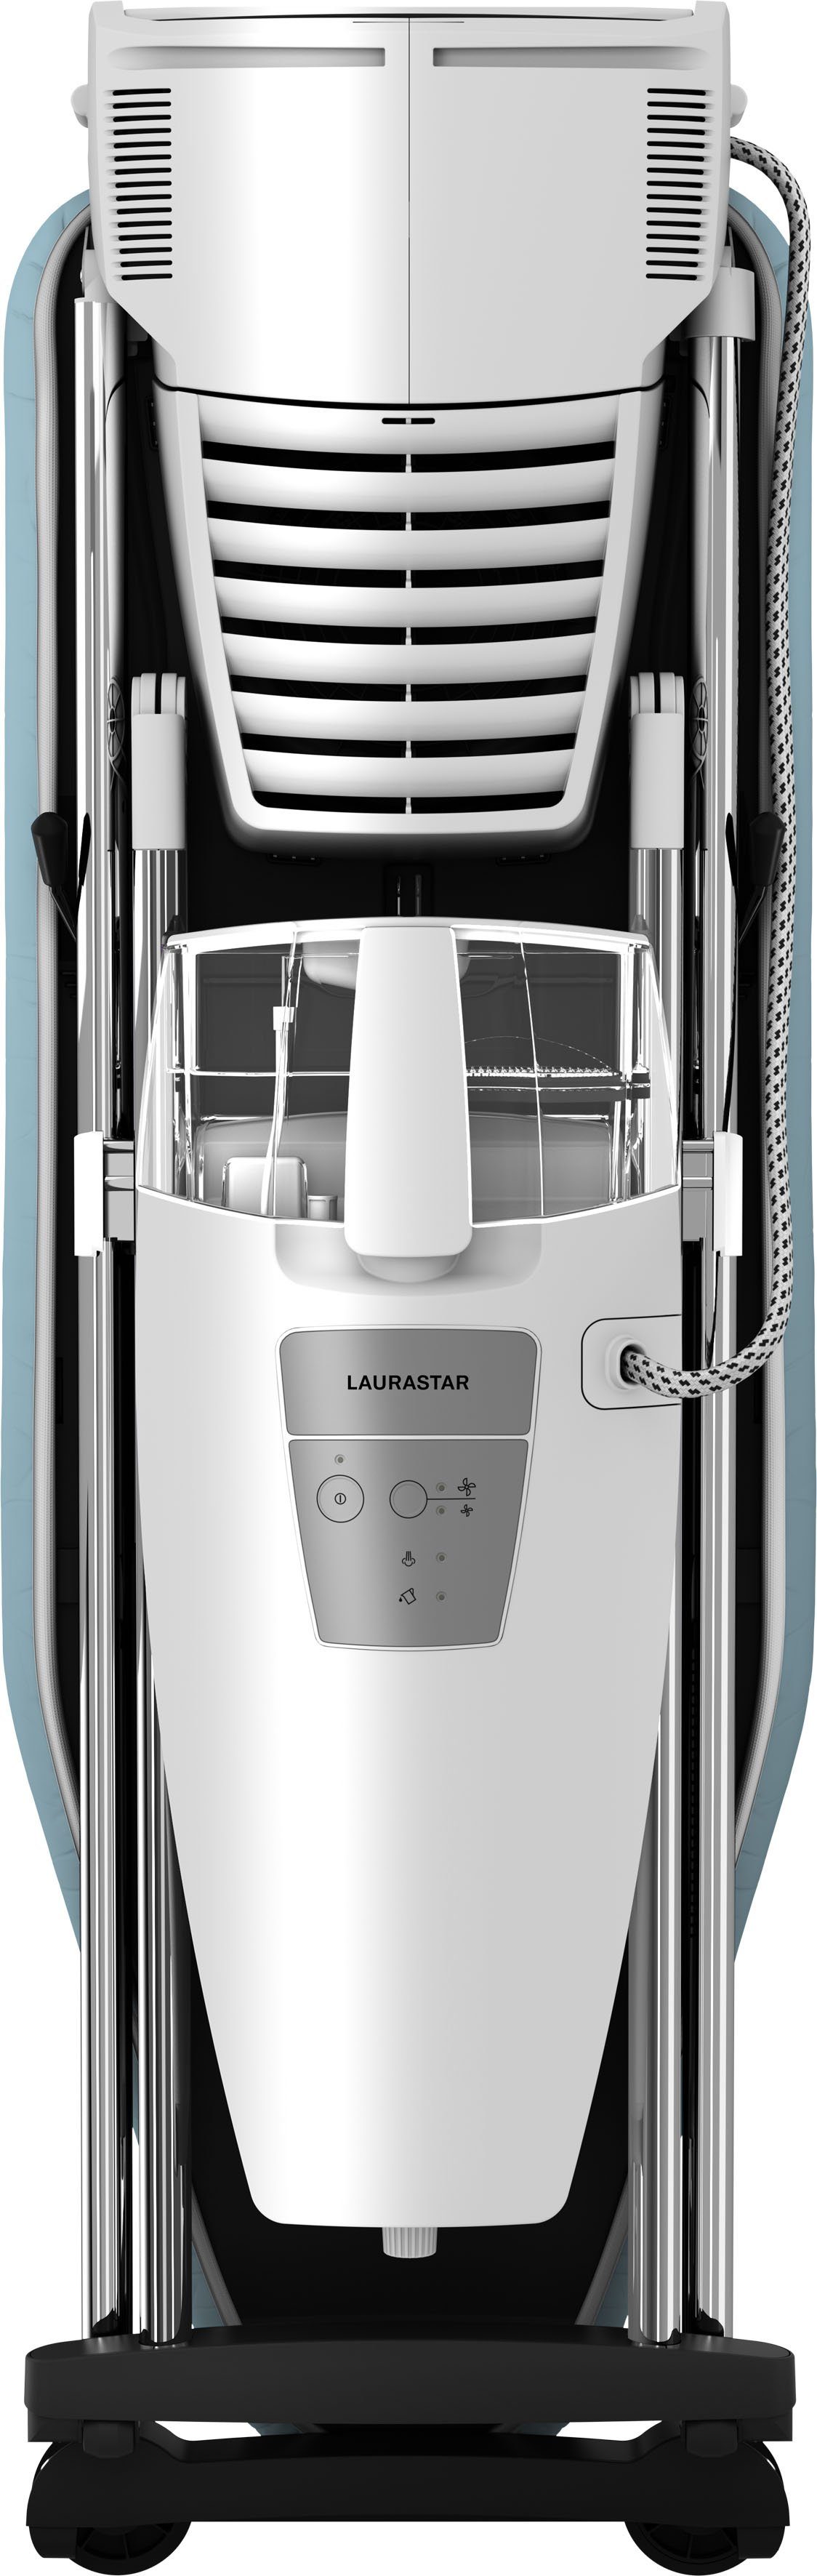 Xtremecover, Bügelsystem Pure LAURASTAR S W + 2200